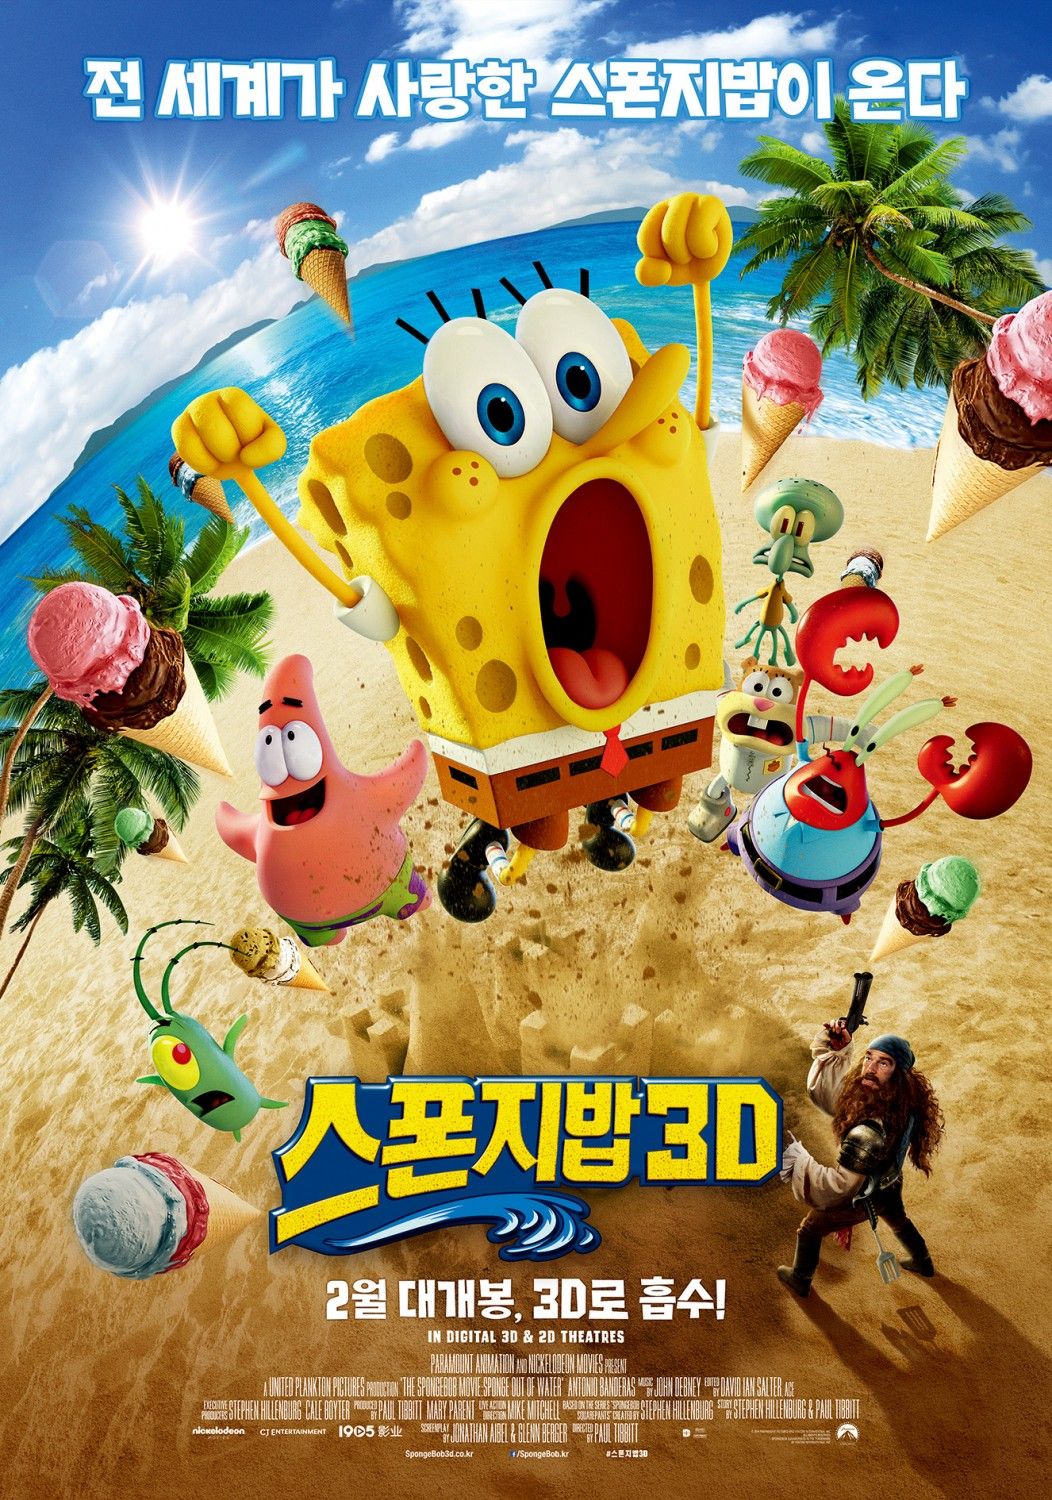 the spongebob squarepants movie watchcartoononline